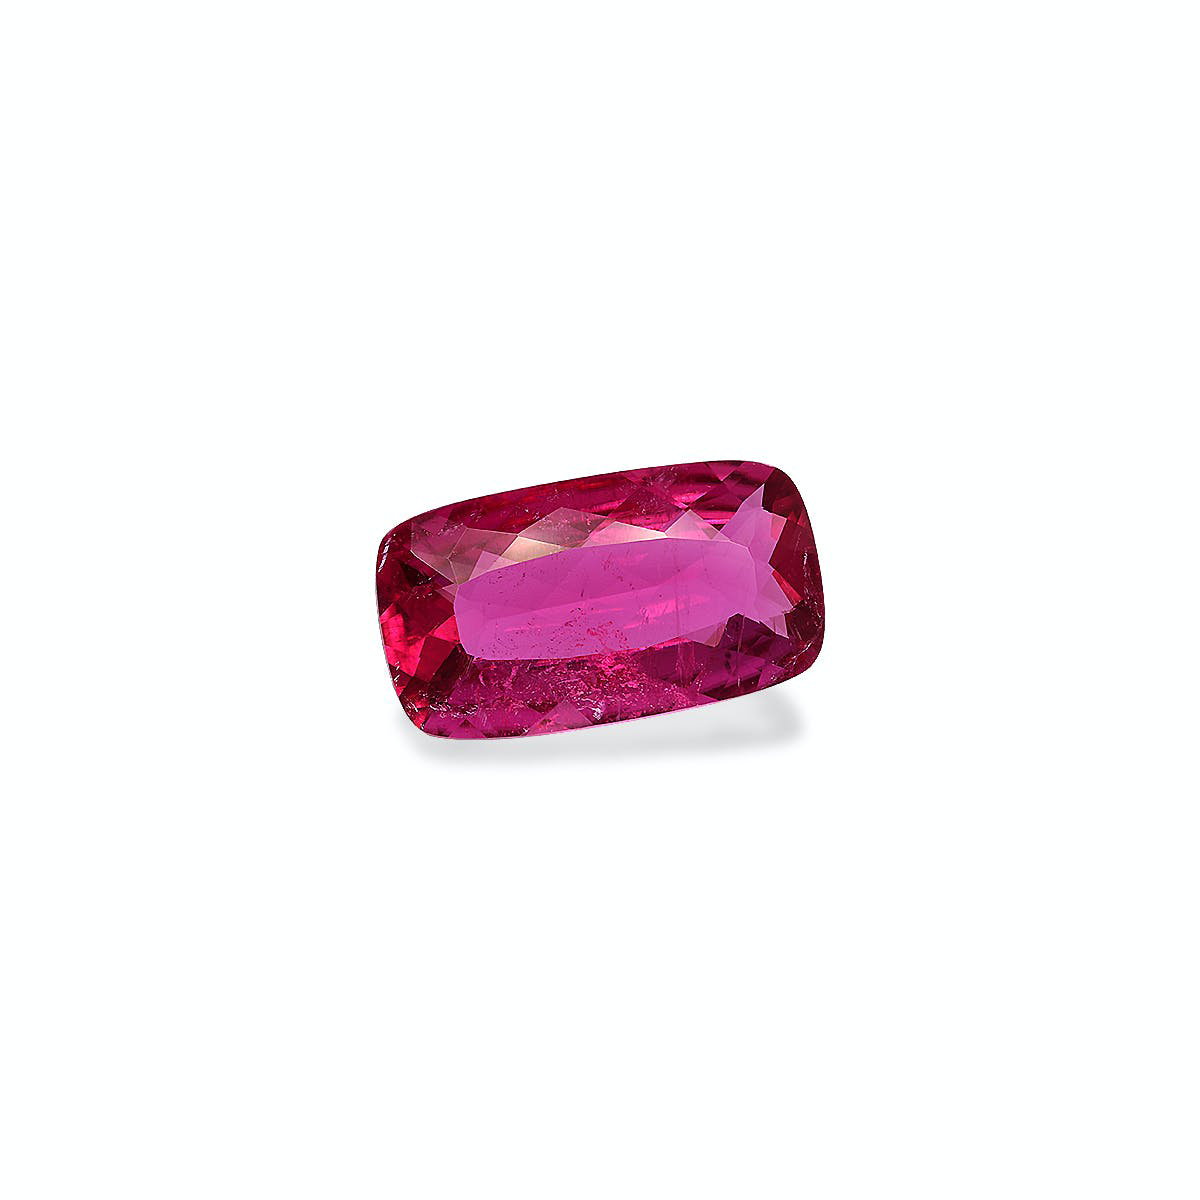 Picture of Vivid Pink Rubellite Tourmaline 8.16ct (RL1084)